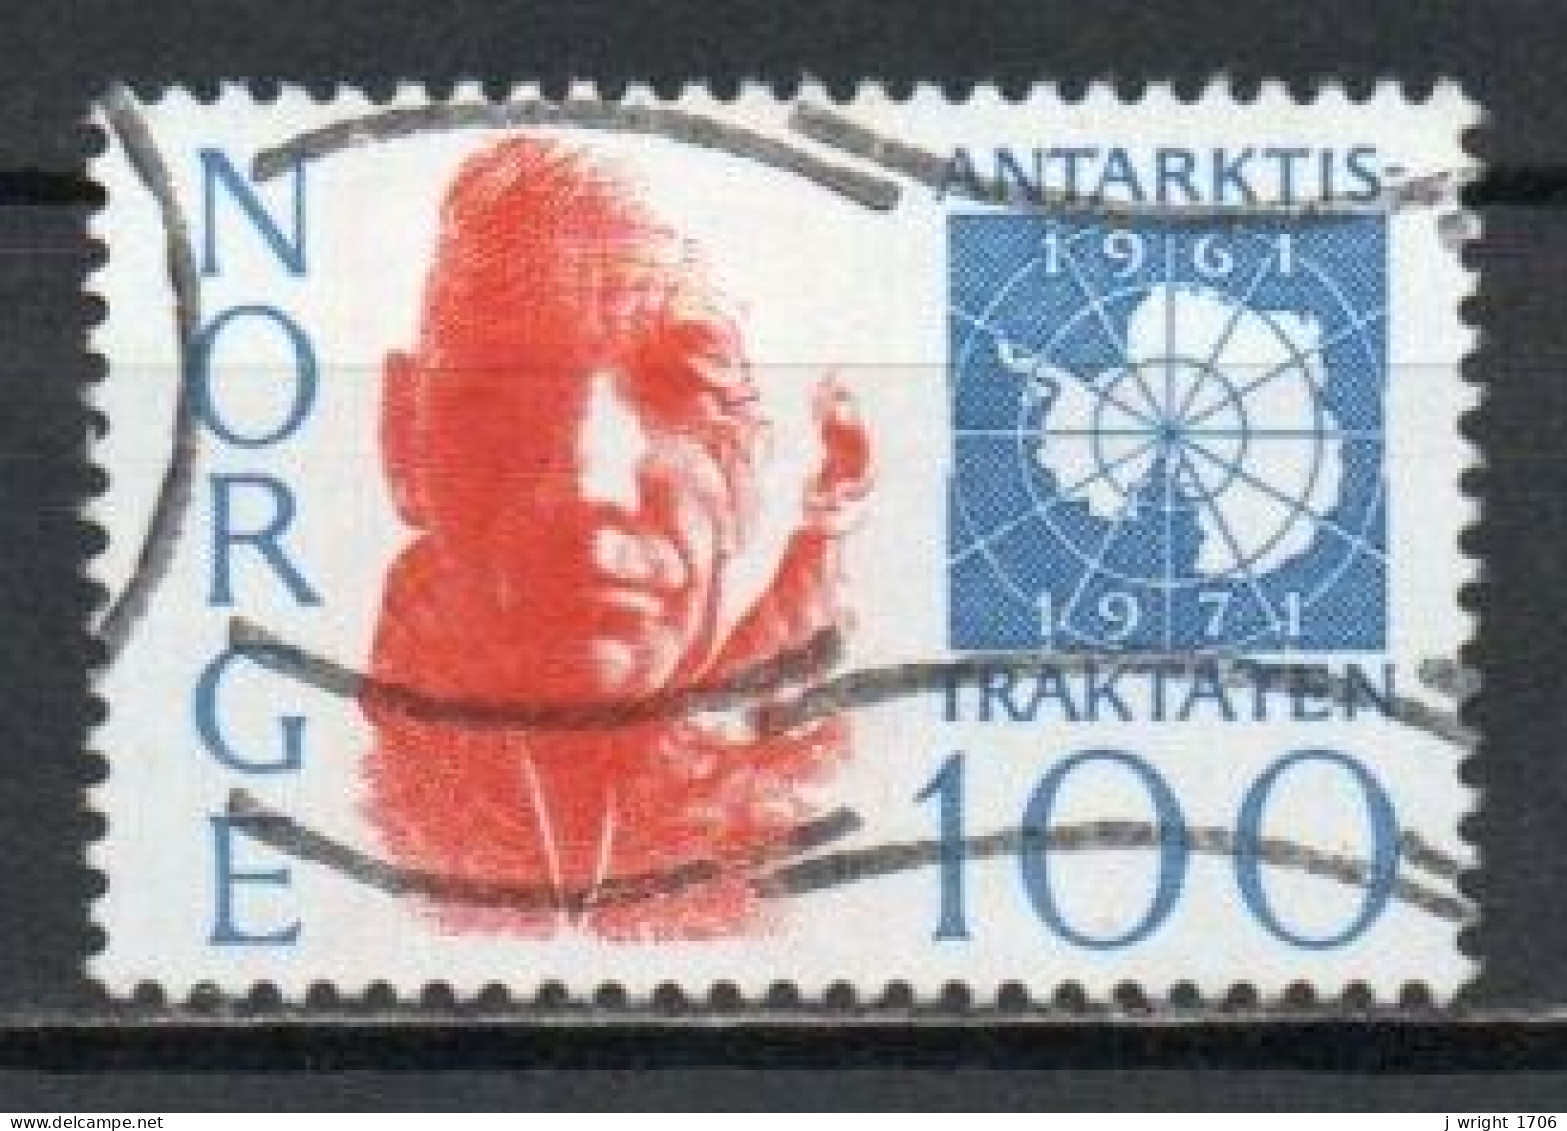 Norway, 1971, Antartic Treaty 10th Anniv, 100ö, USED - Gebraucht